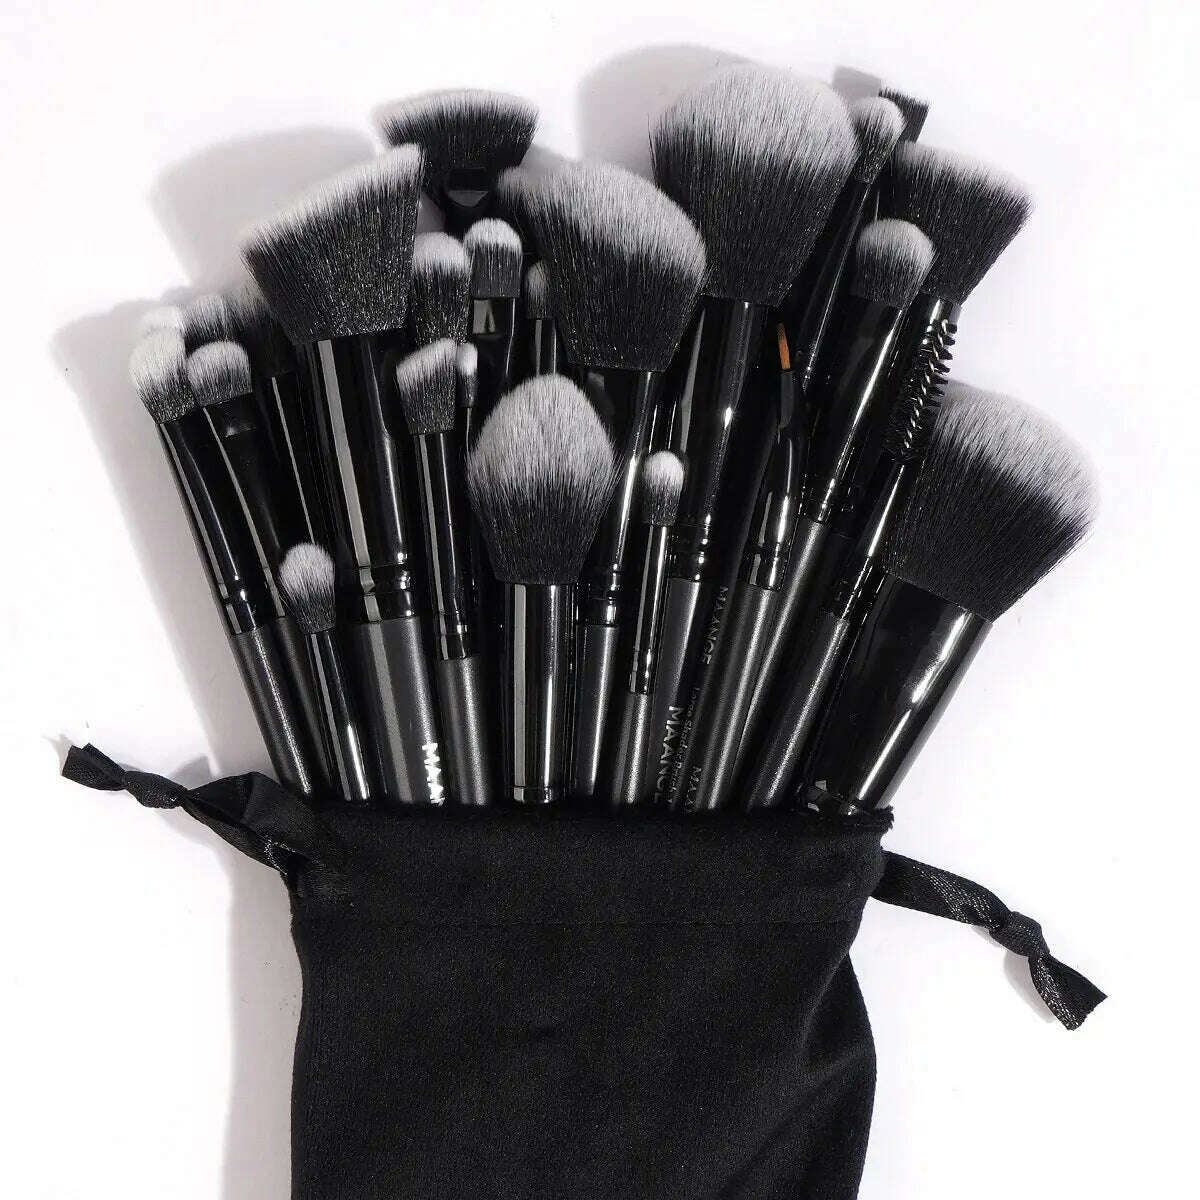 KIMLUD, MAANGE 30pcs Professional Makeup Brush Set Foundation Concealers Eye Shadows Powder Blush Blending Brushes Beauty Tools with Bag, Black Black, KIMLUD Women's Clothes